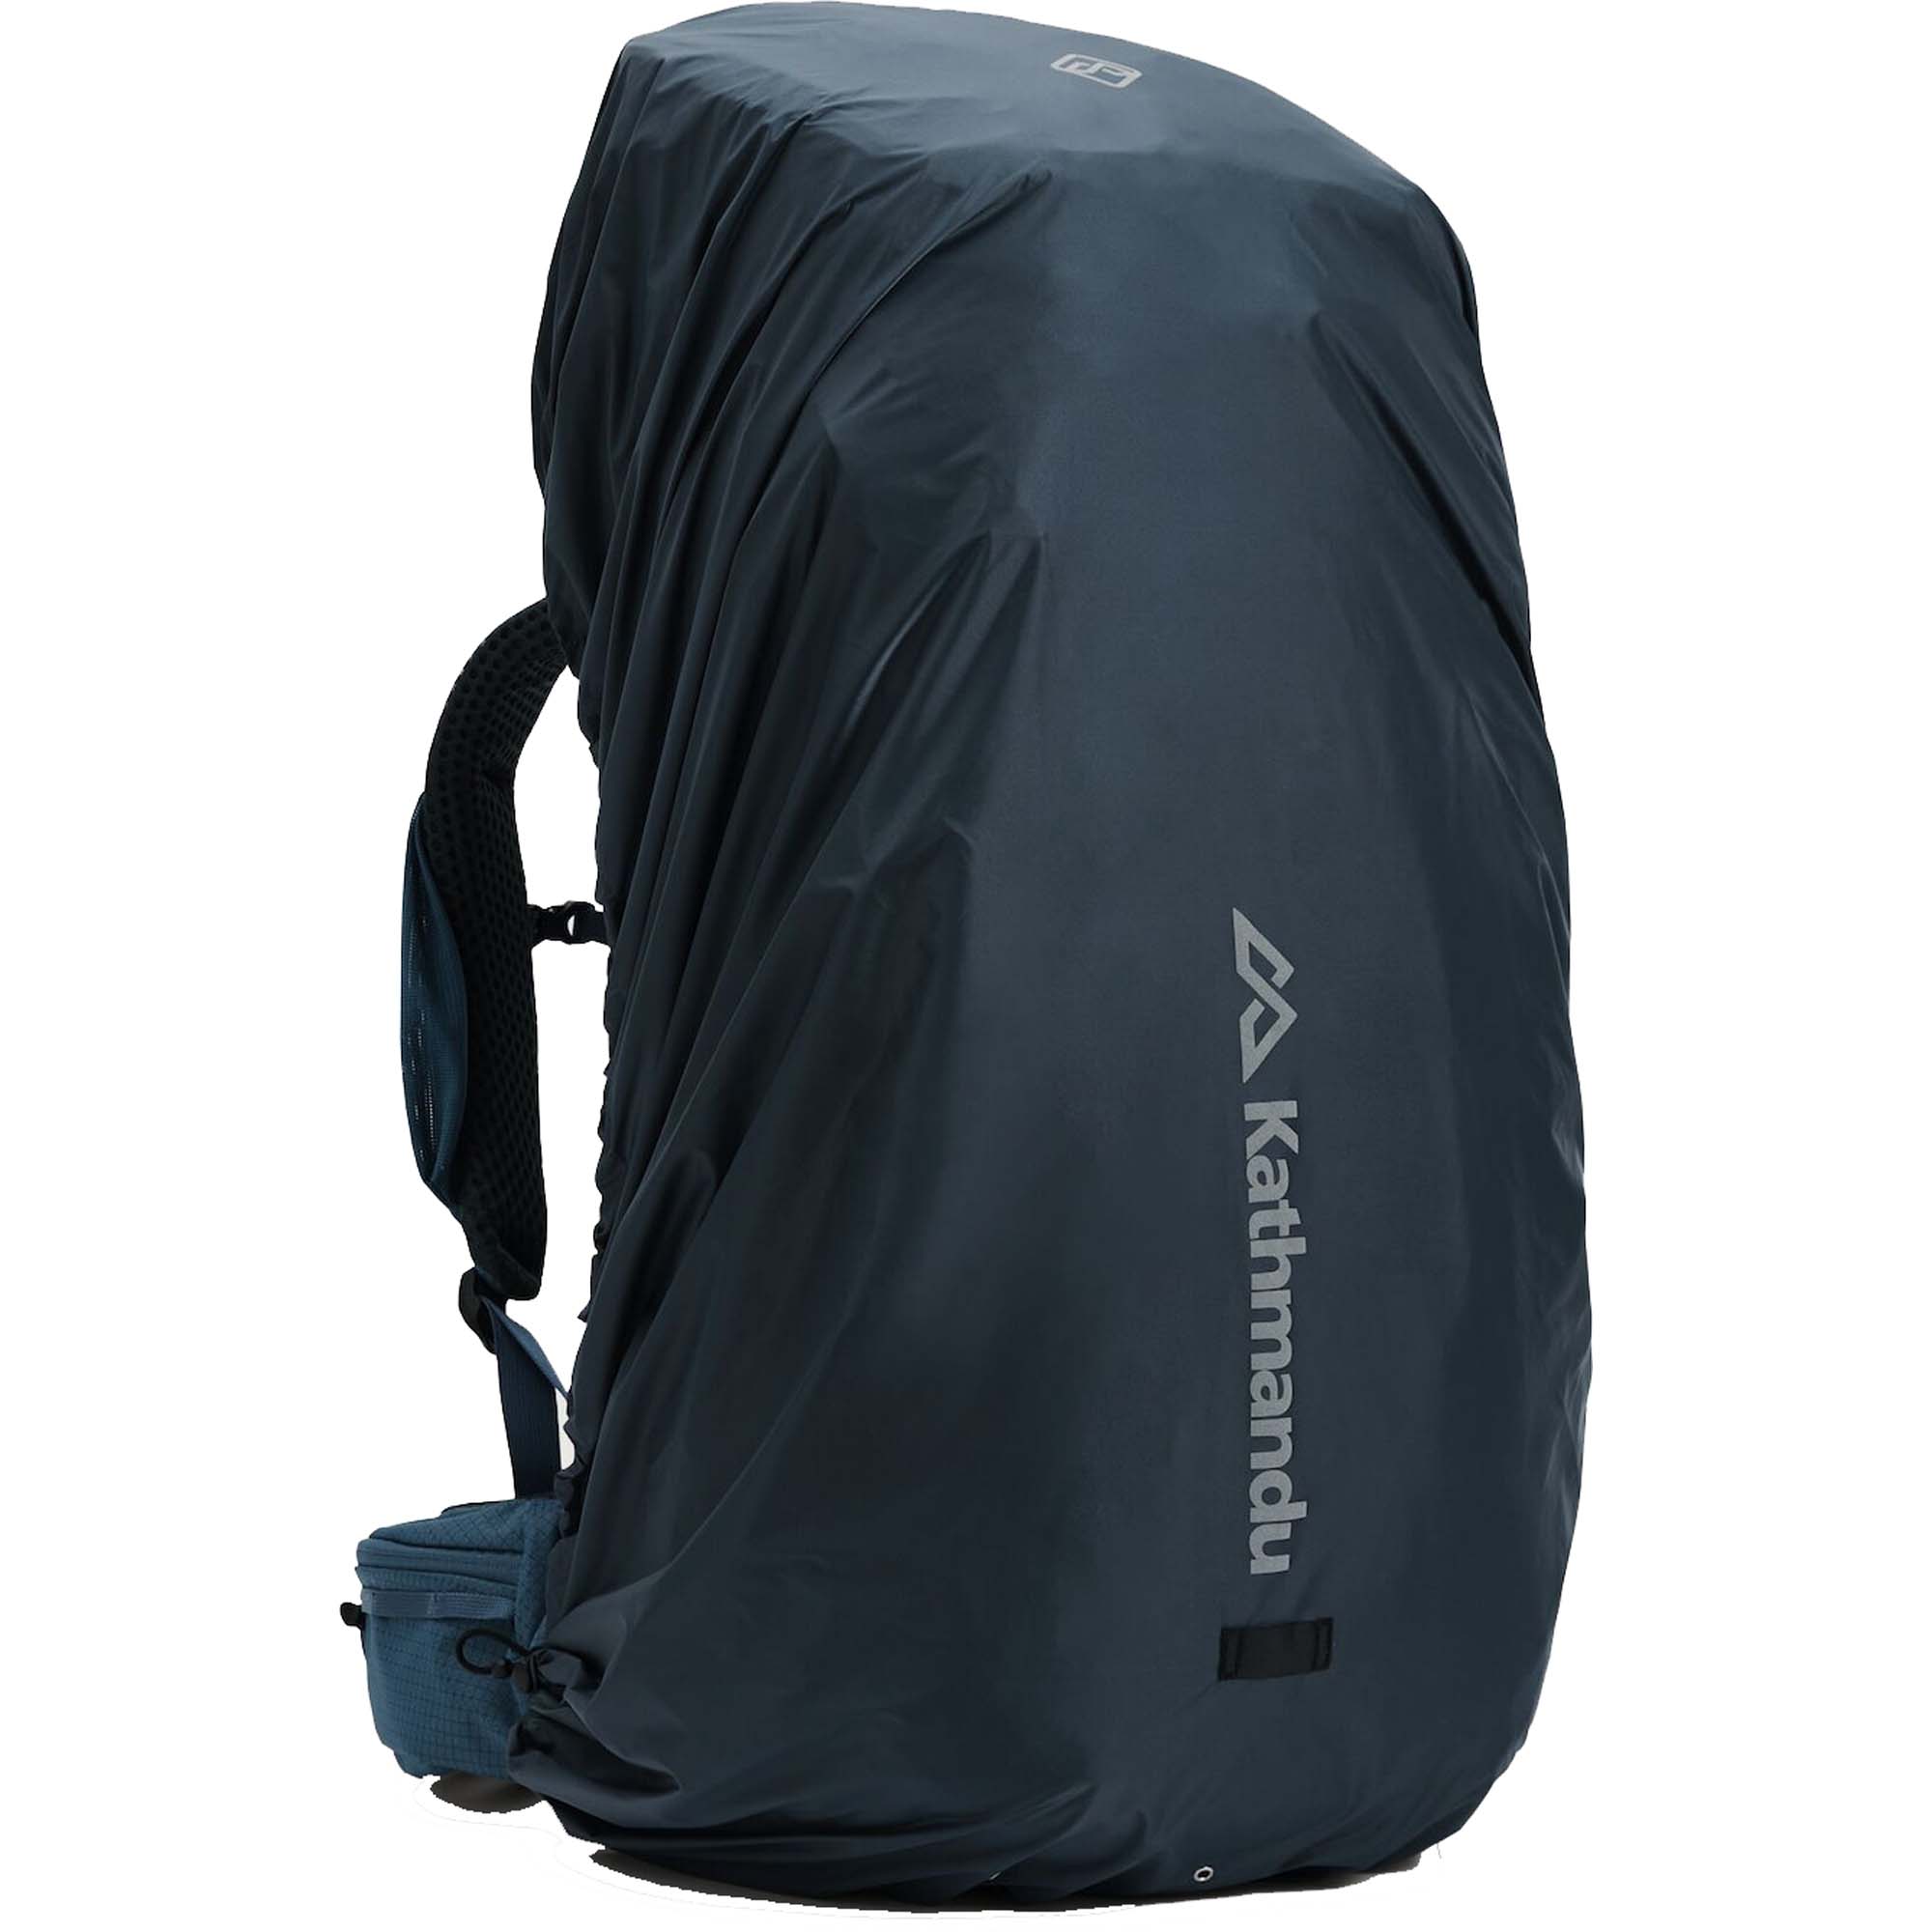 Kathmandu Pack Raincover V2 Large 50-75 Backpack Accessory